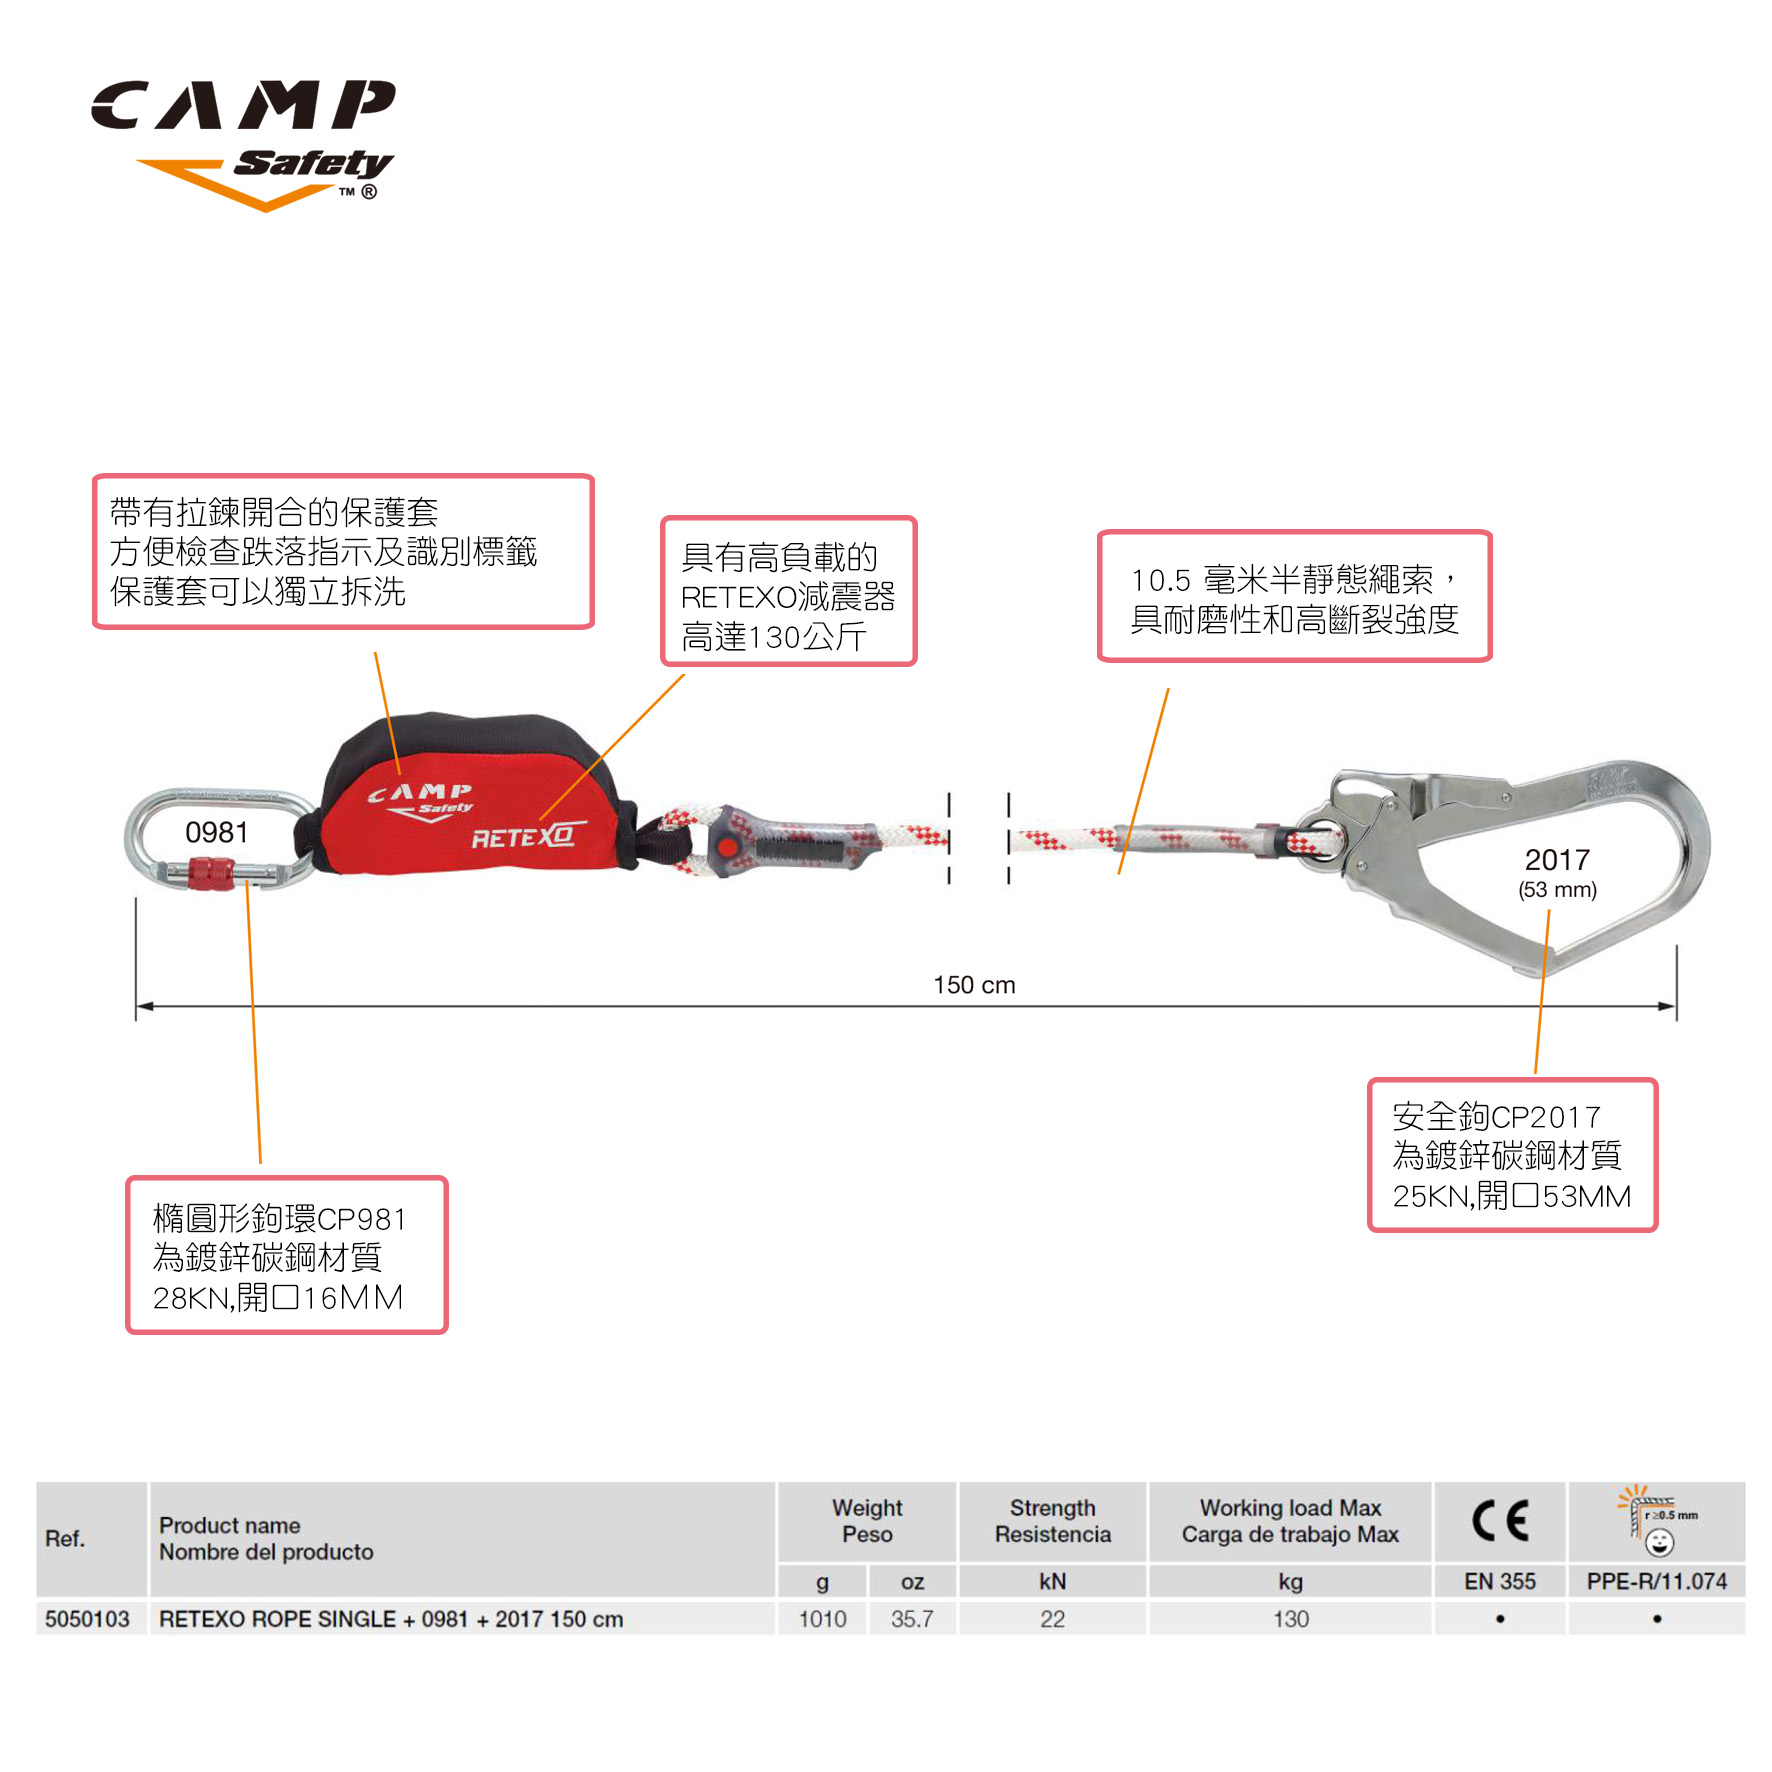 CAMP RETEXO ROPE - Rope lanyard 單鉤挽索 150cm